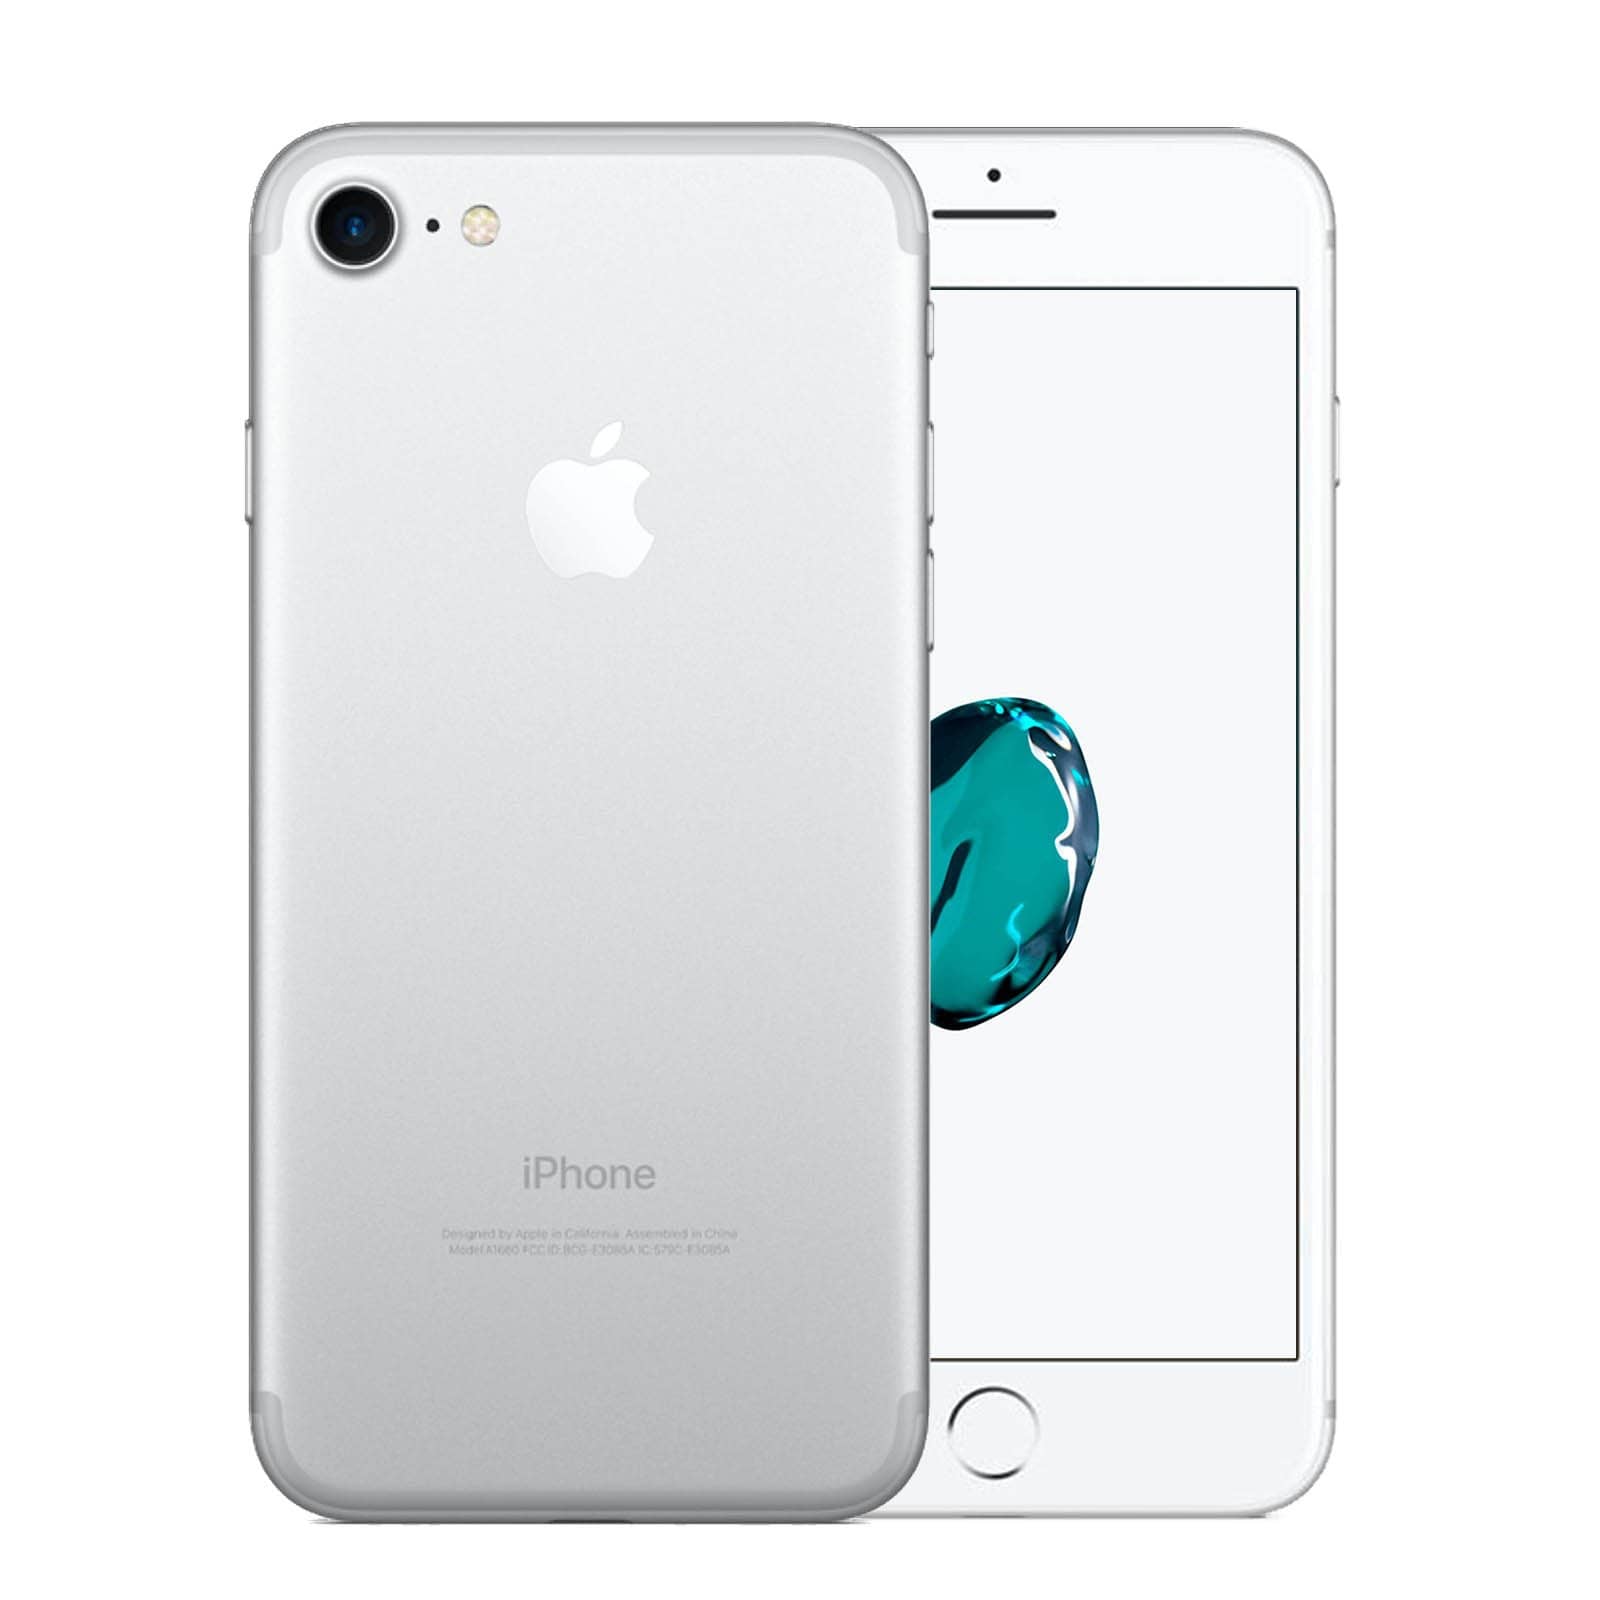 Apple iPhone 7 32GB Silver Good - Unlocked 32GB Silver Good